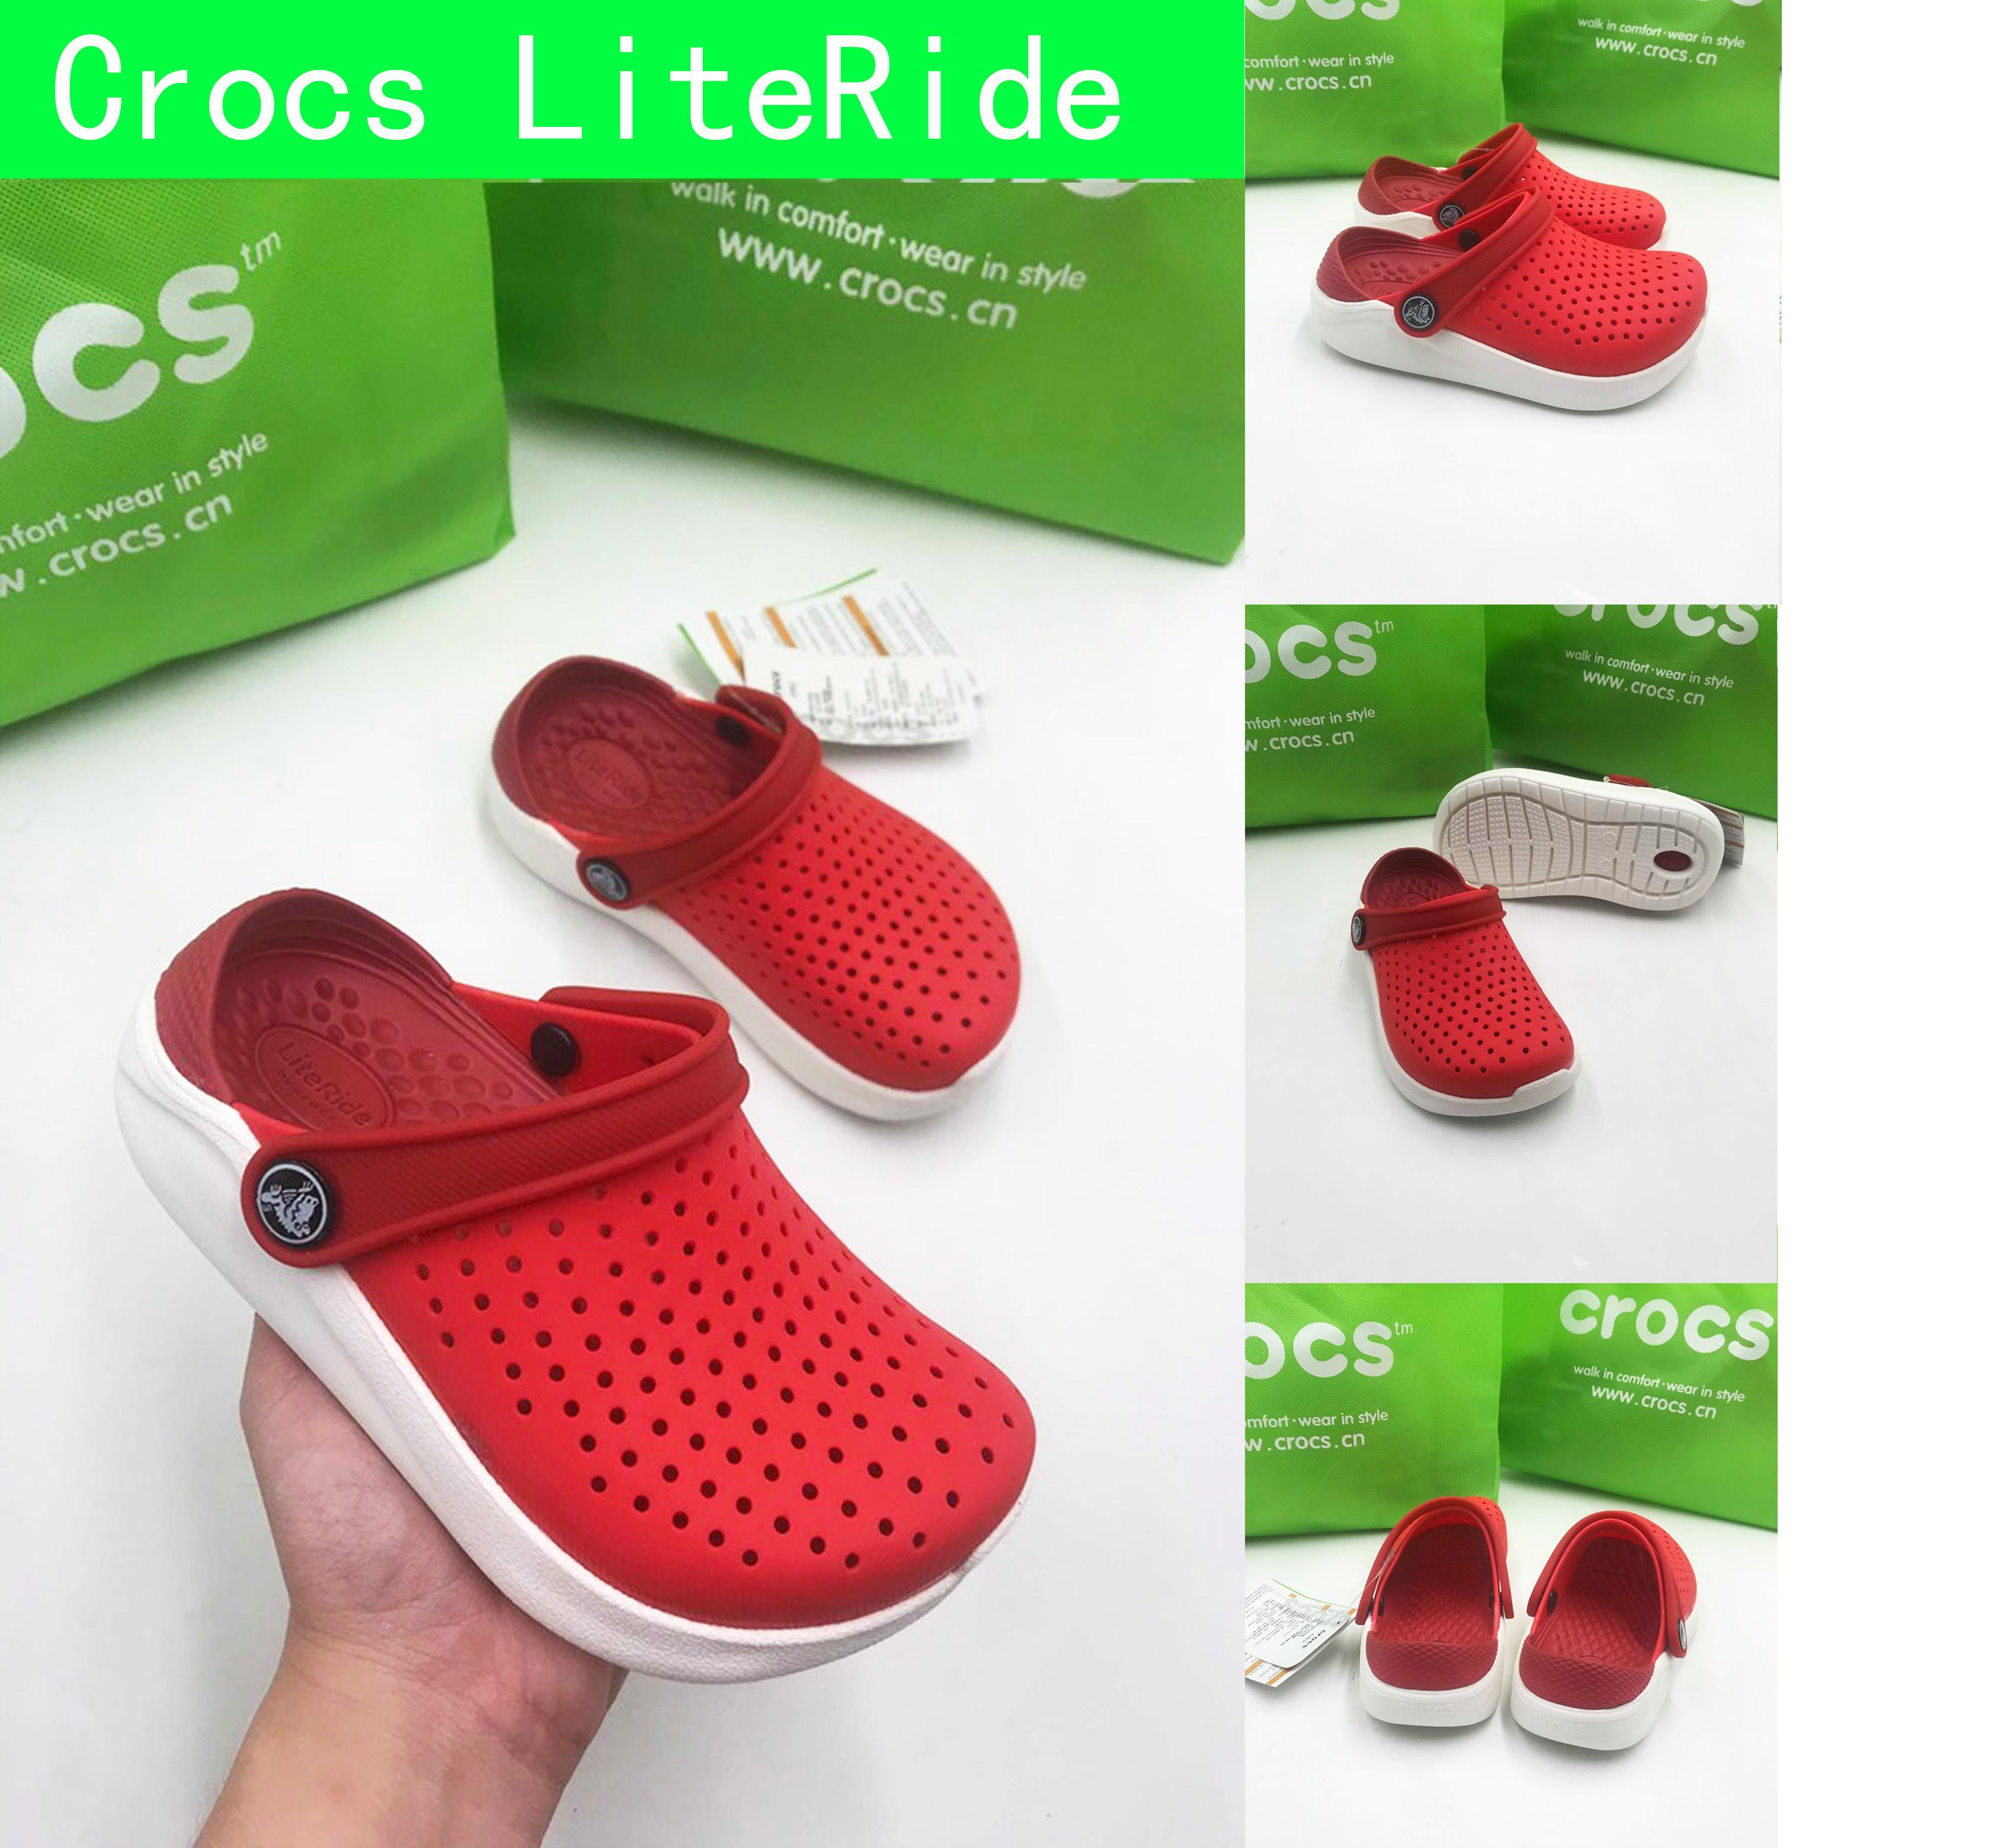 literide crocs kids